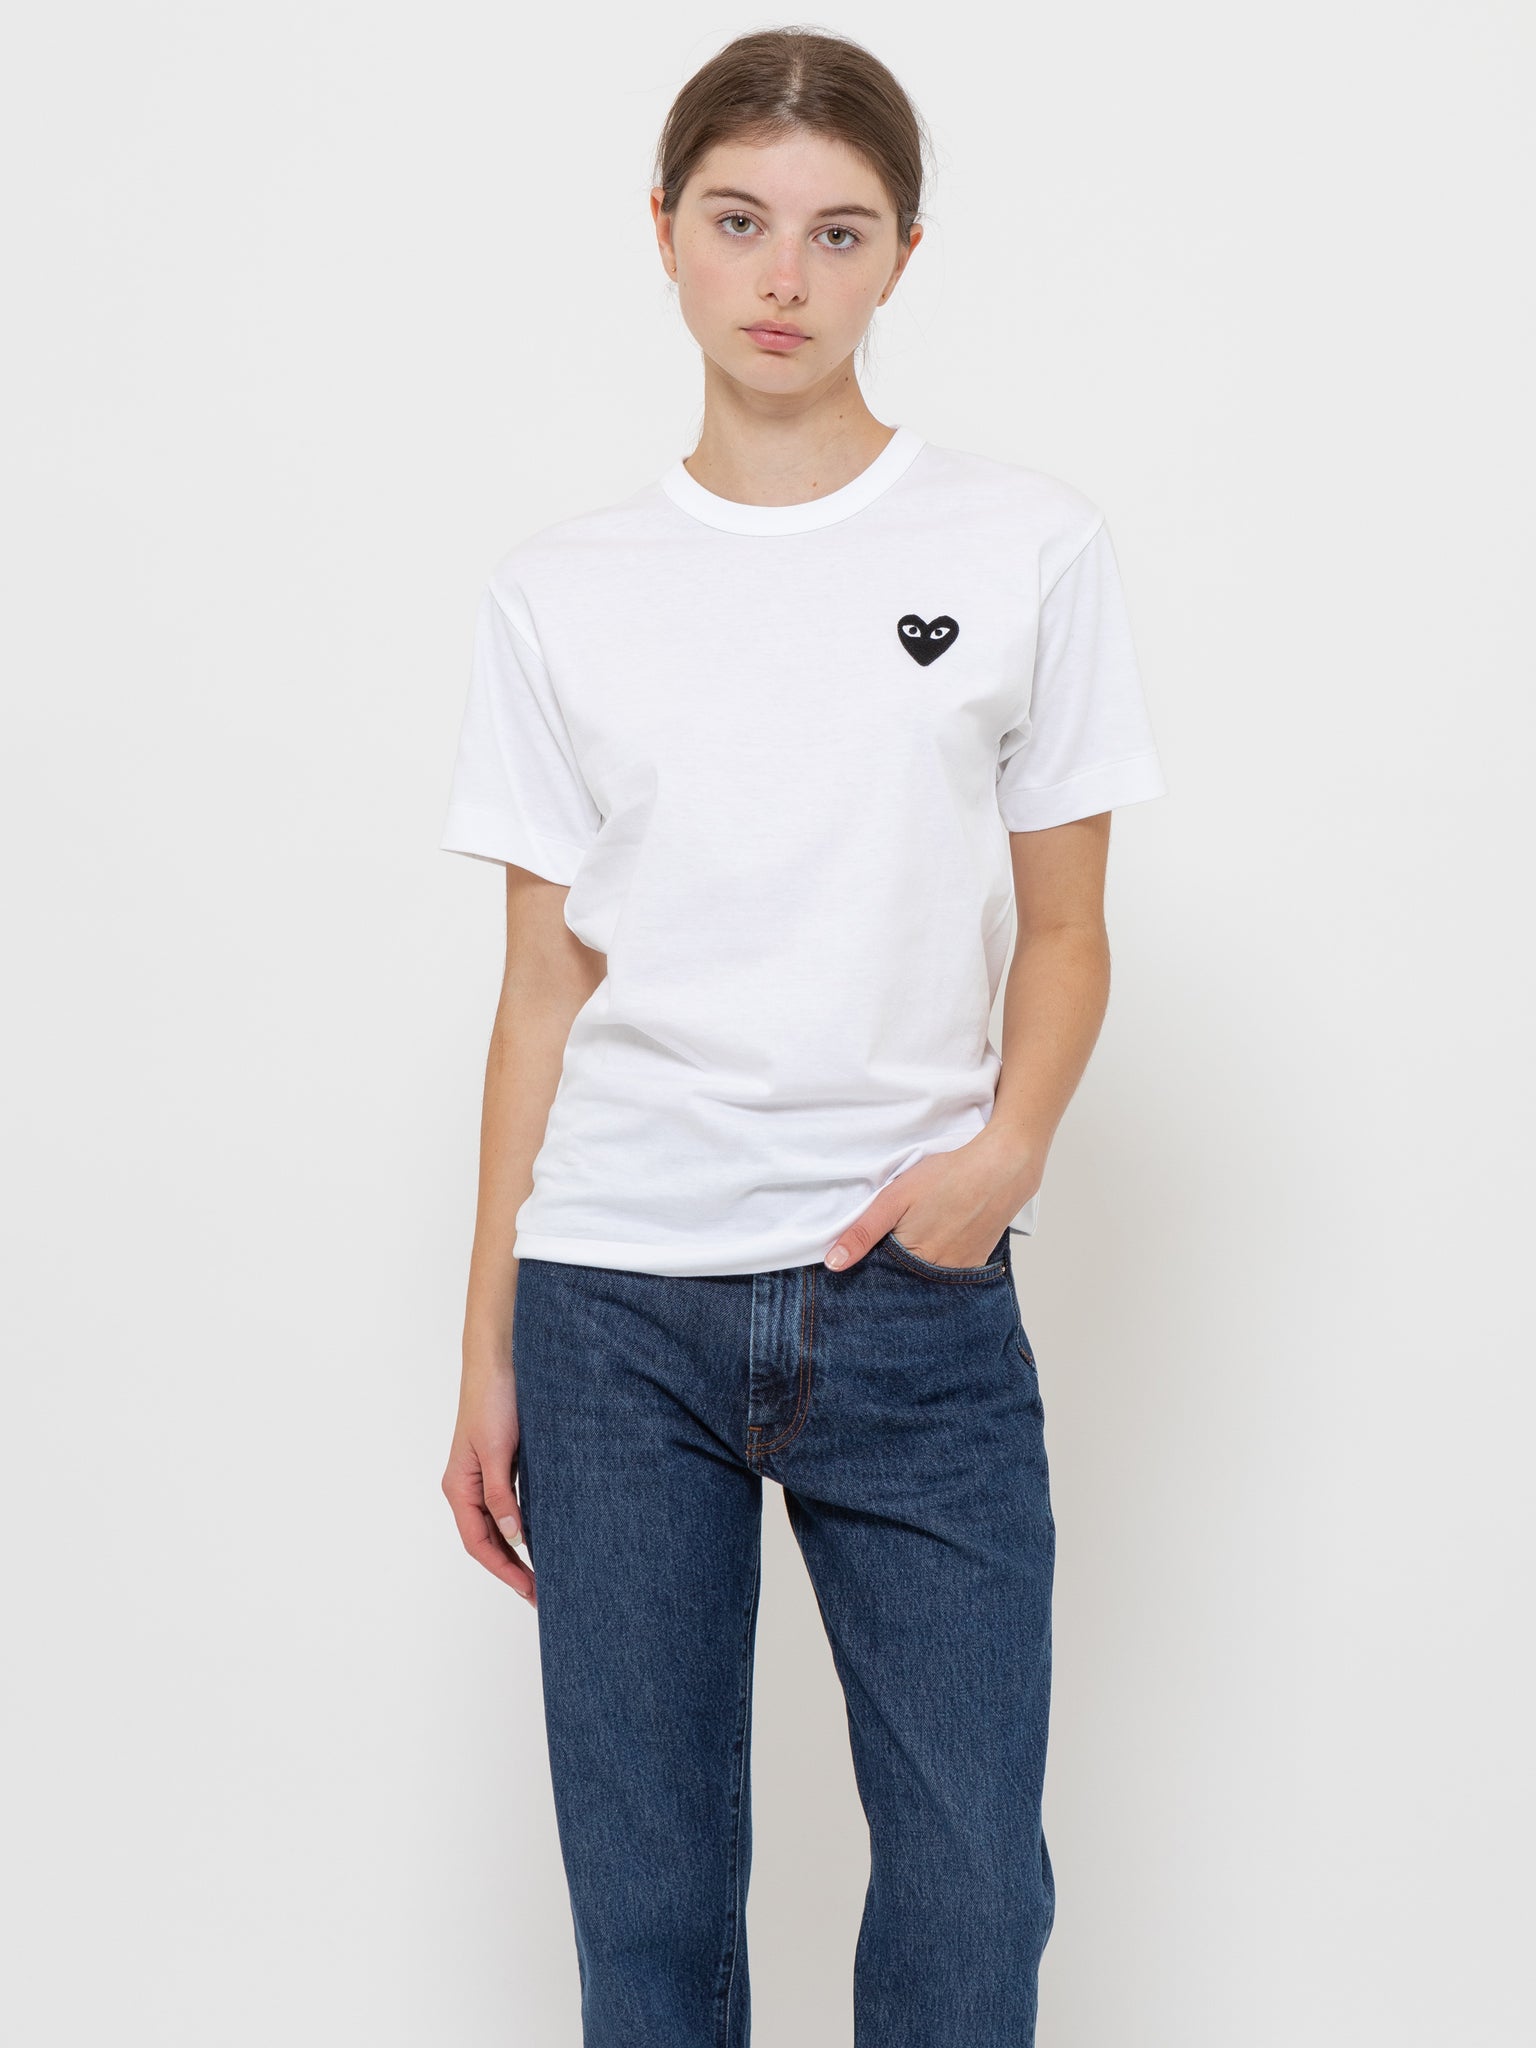 Men's Fit T-Shirt White Black Heart